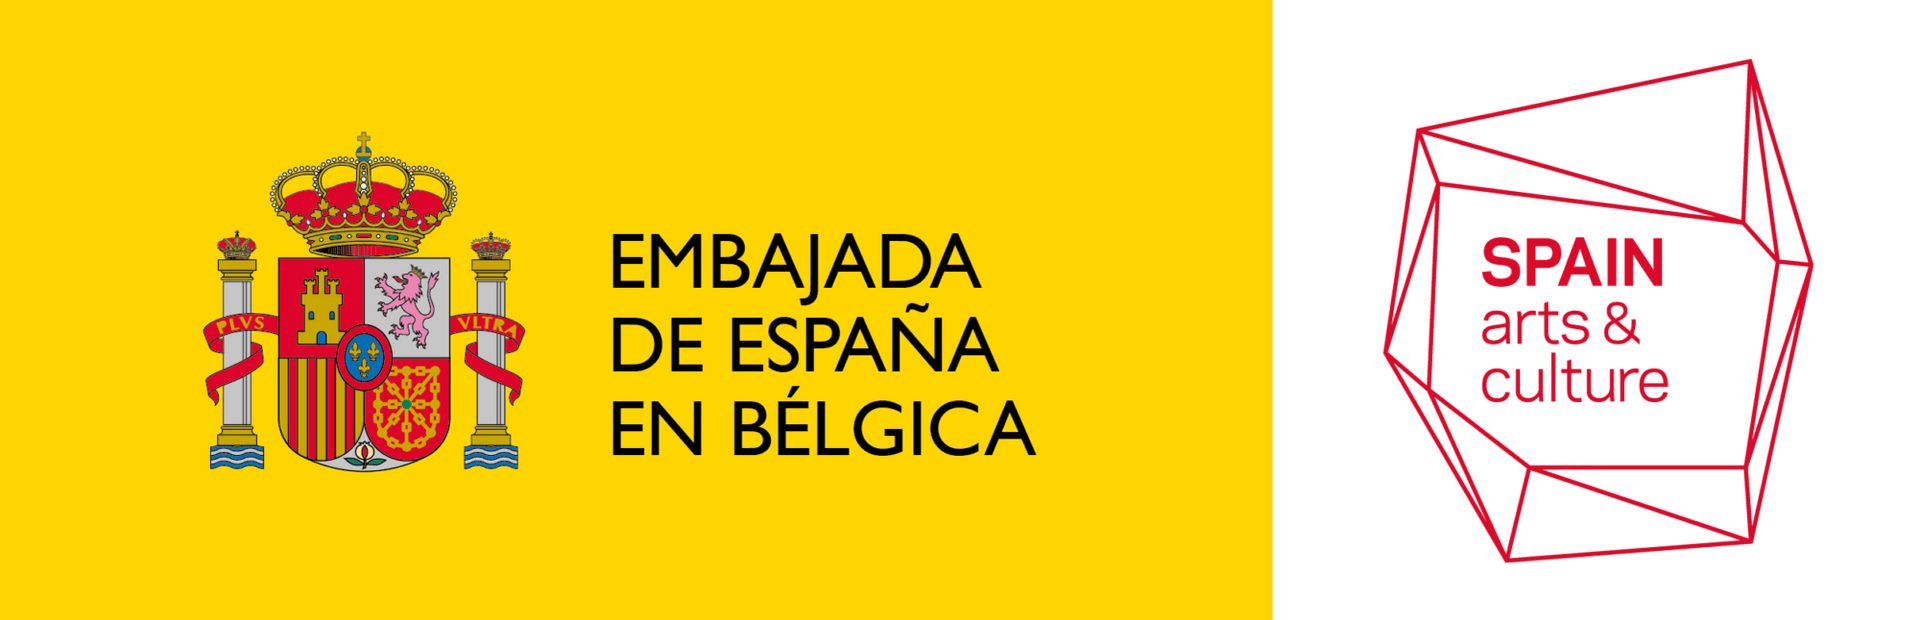 embajada-de-espana-en-belgica-color